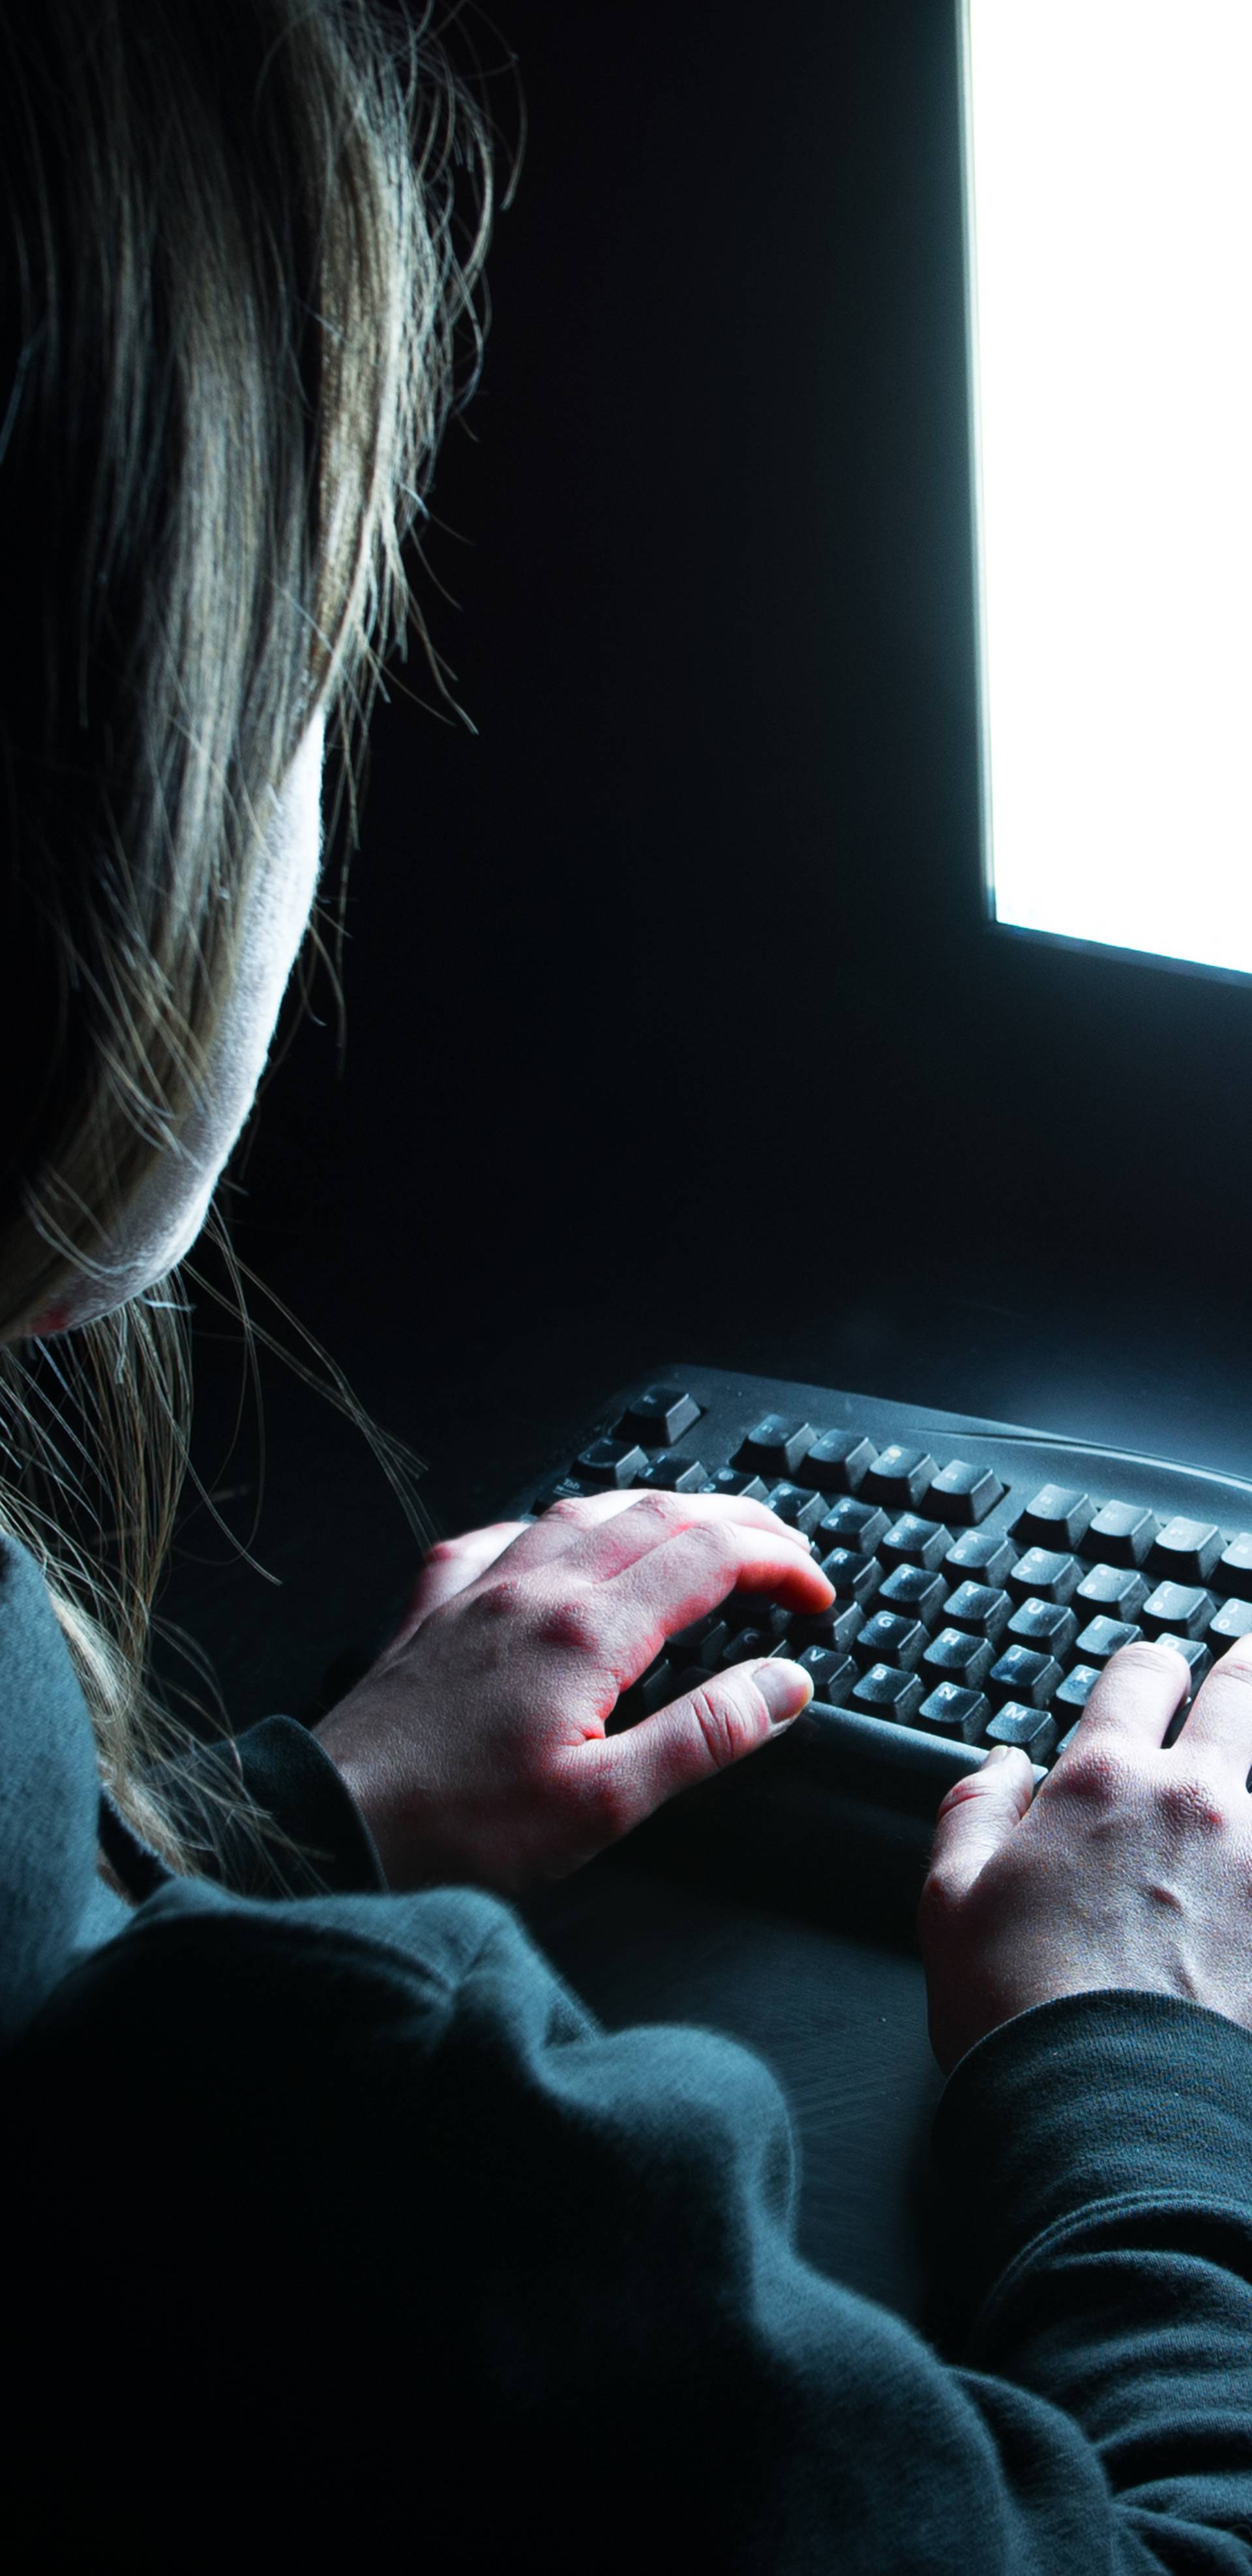 Bugarska uhitila osumnjičenog muškarca za hakerski napad